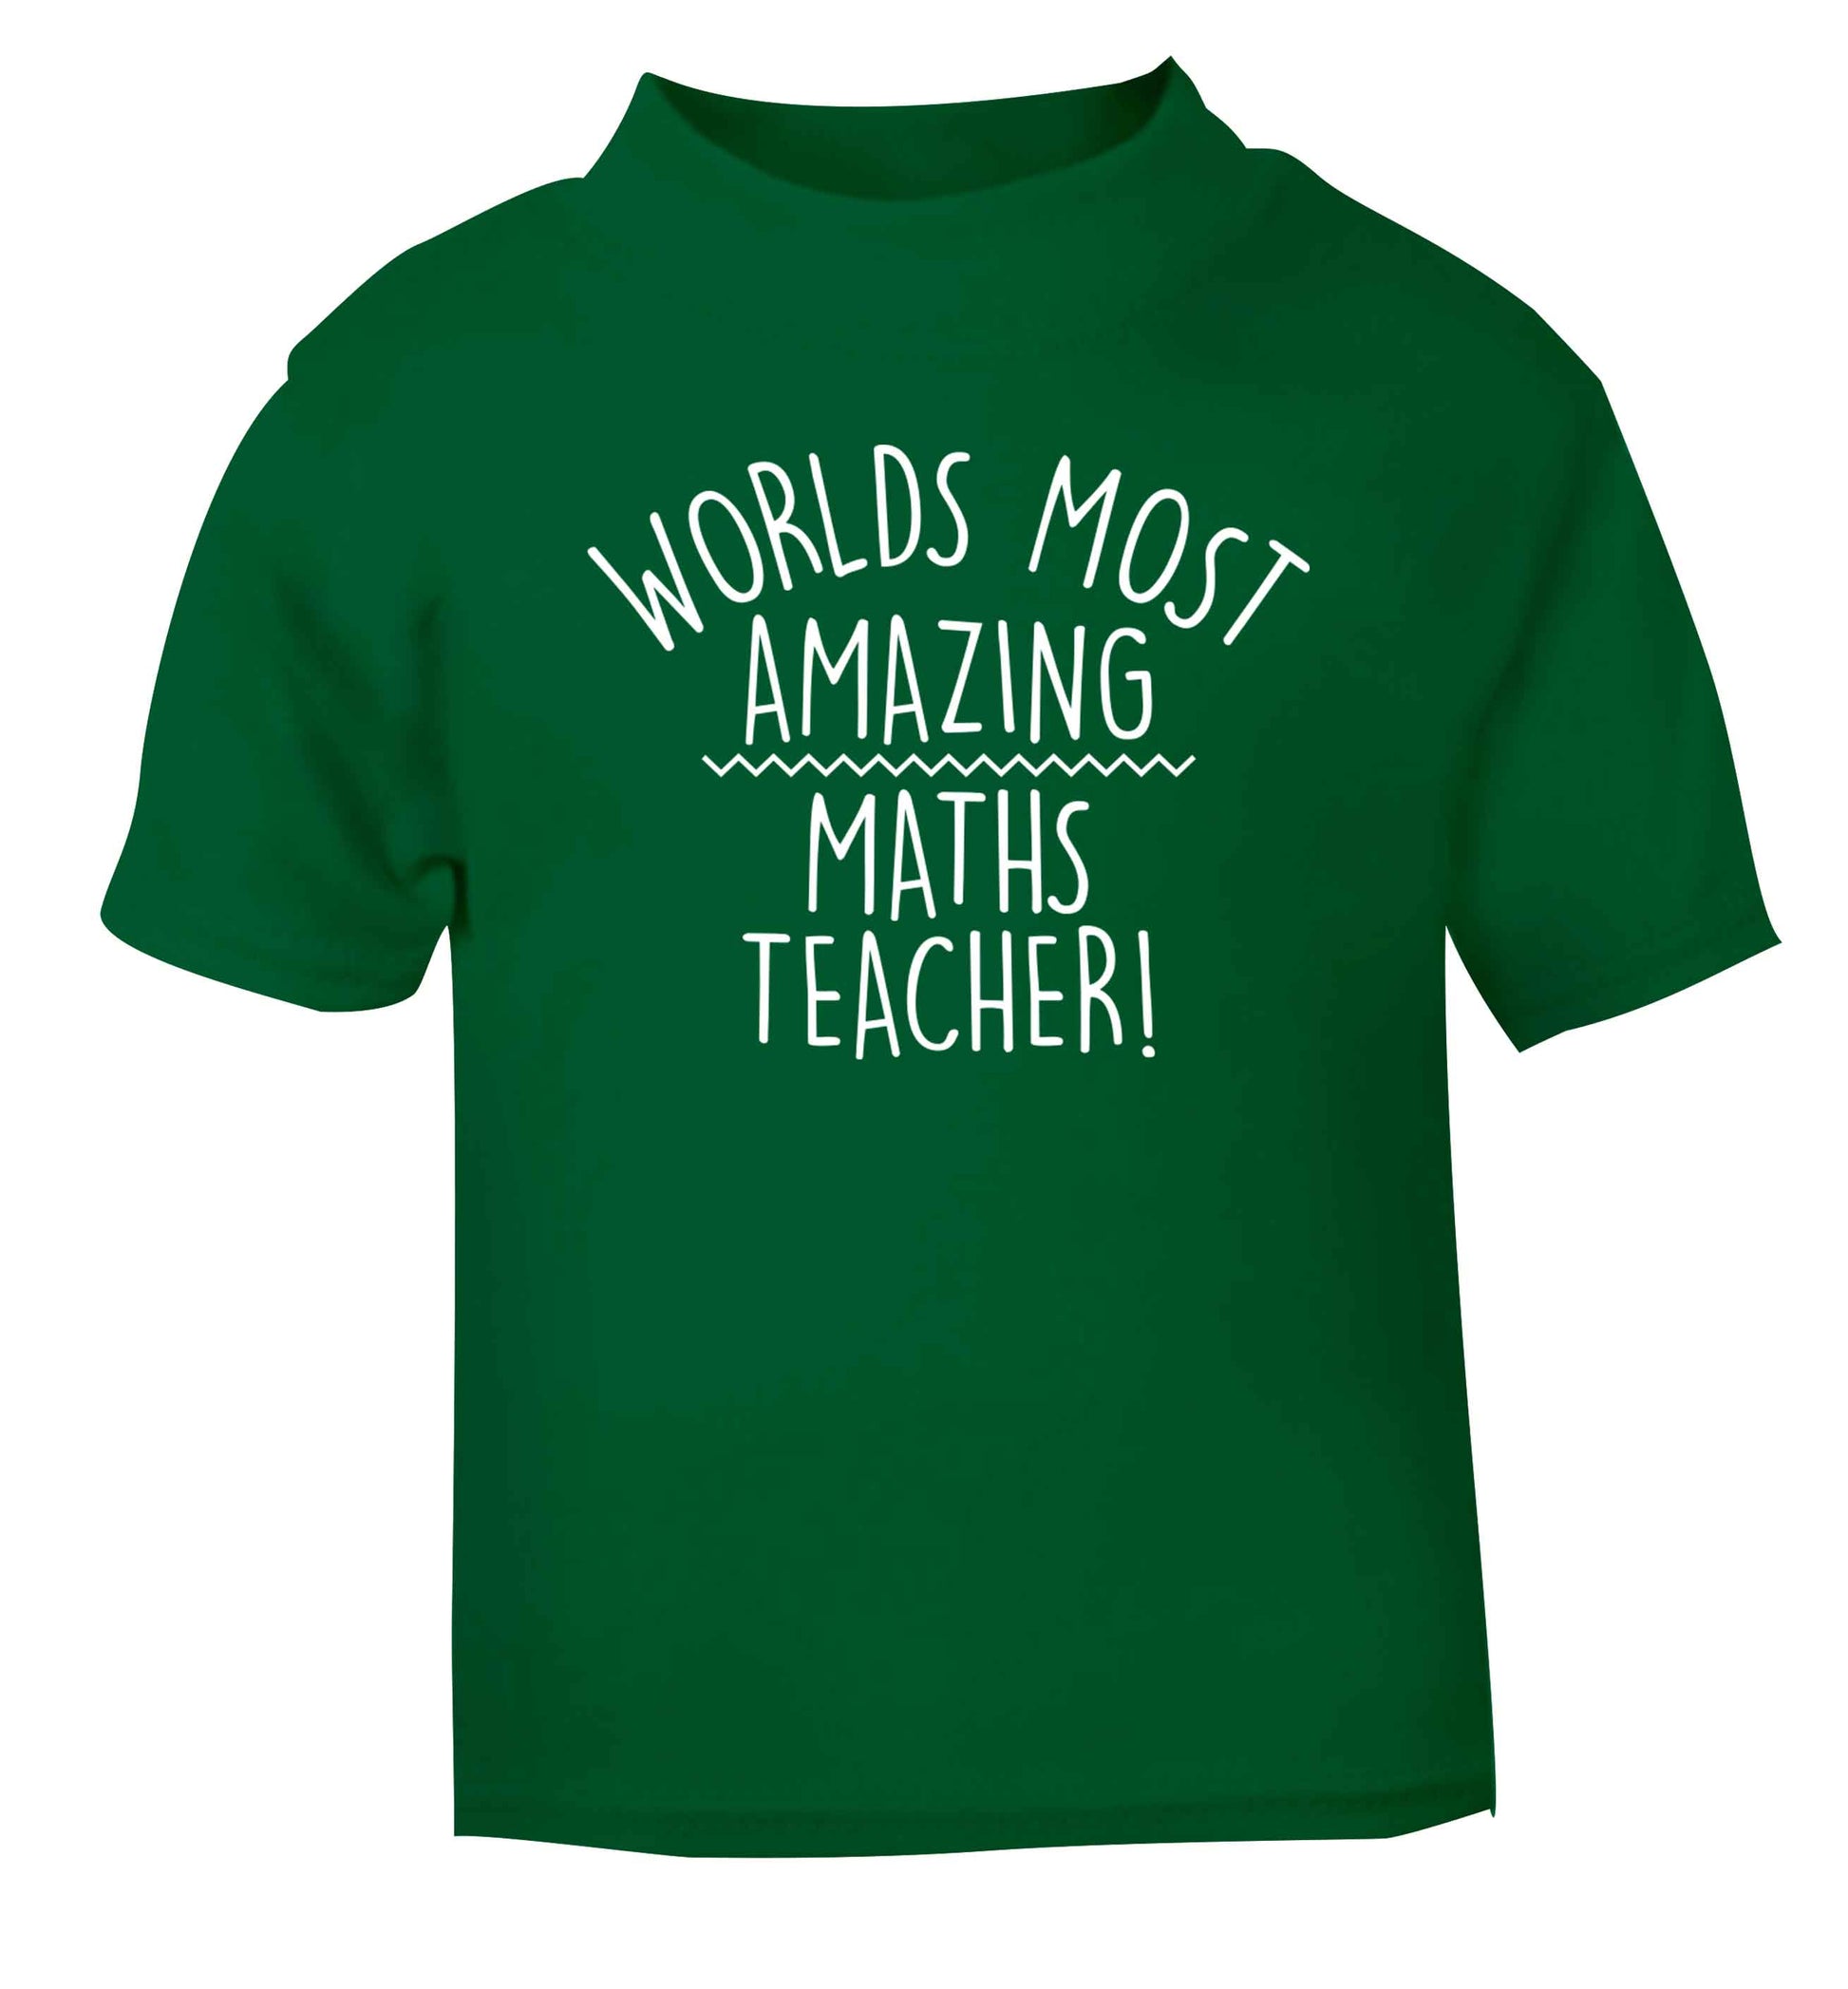 Worlds most amazing maths teacher green baby toddler Tshirt 2 Years